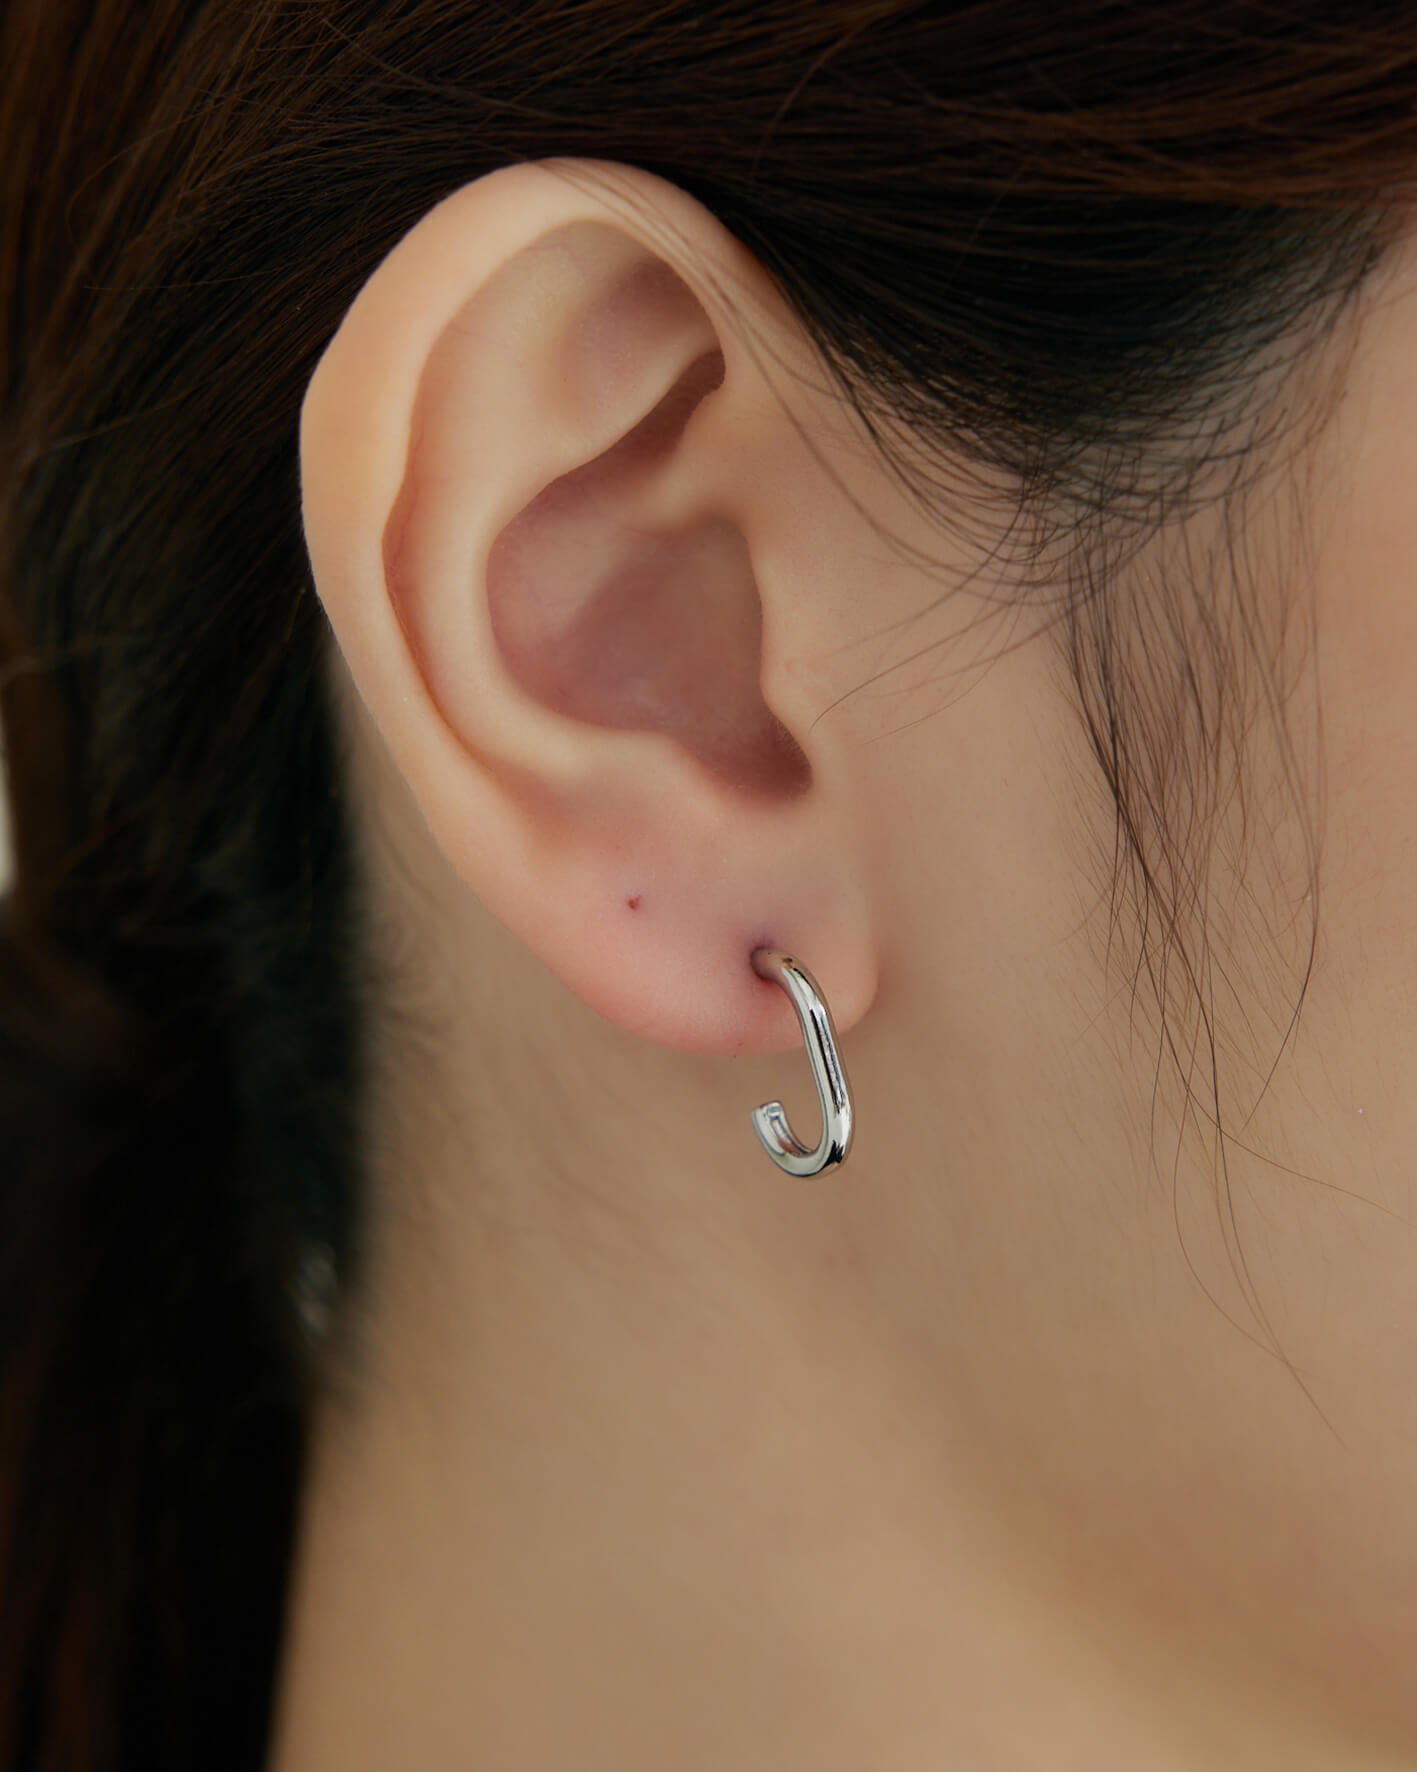 Eco安珂,韓國飾品,韓國耳環,耳針式耳環,C圈耳環,個性耳環